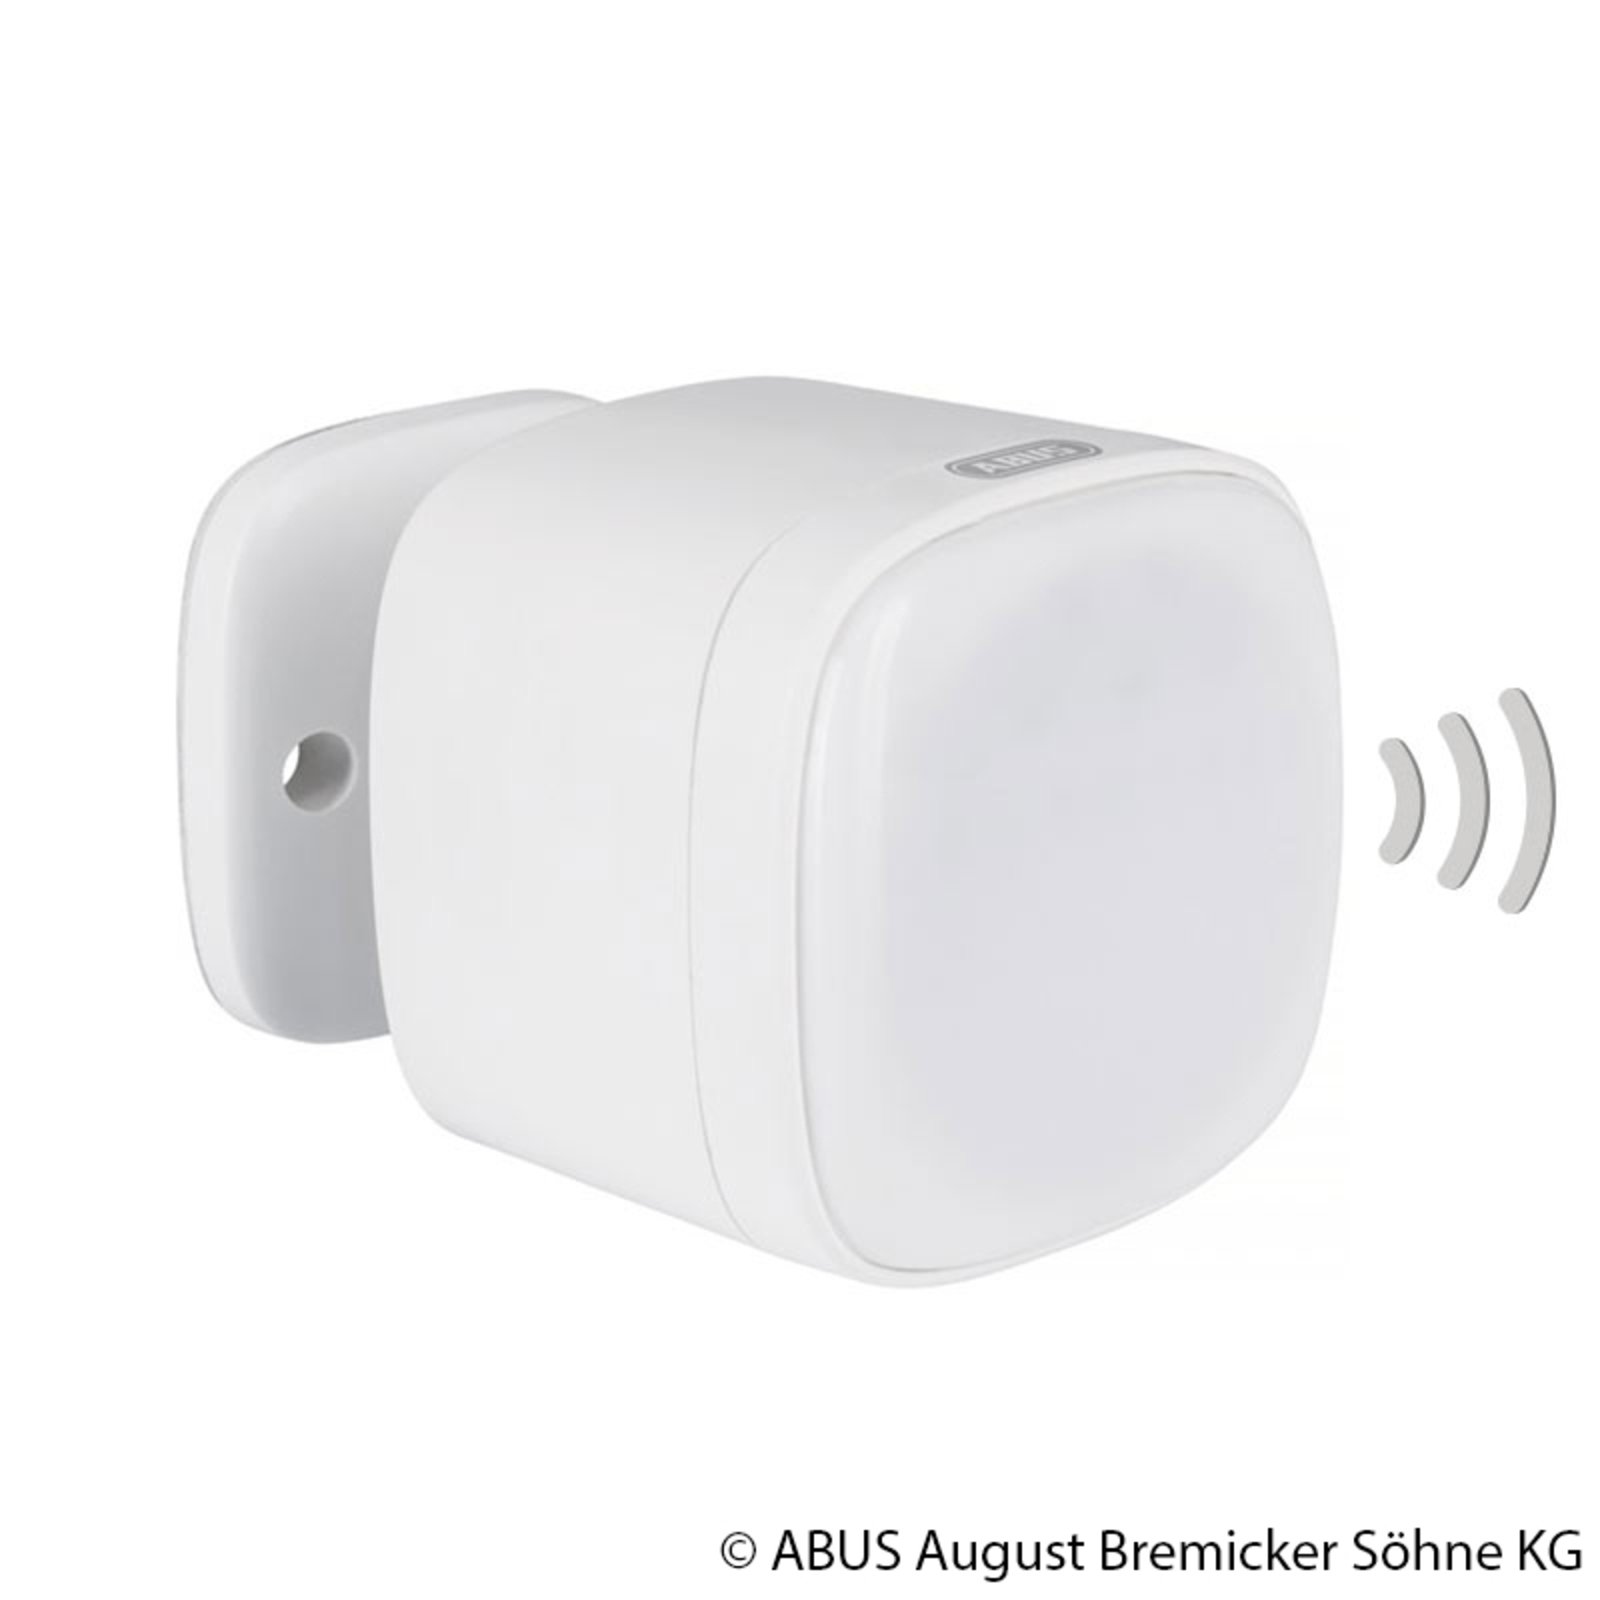 ABUS Z-Wave wireless multi-sensor